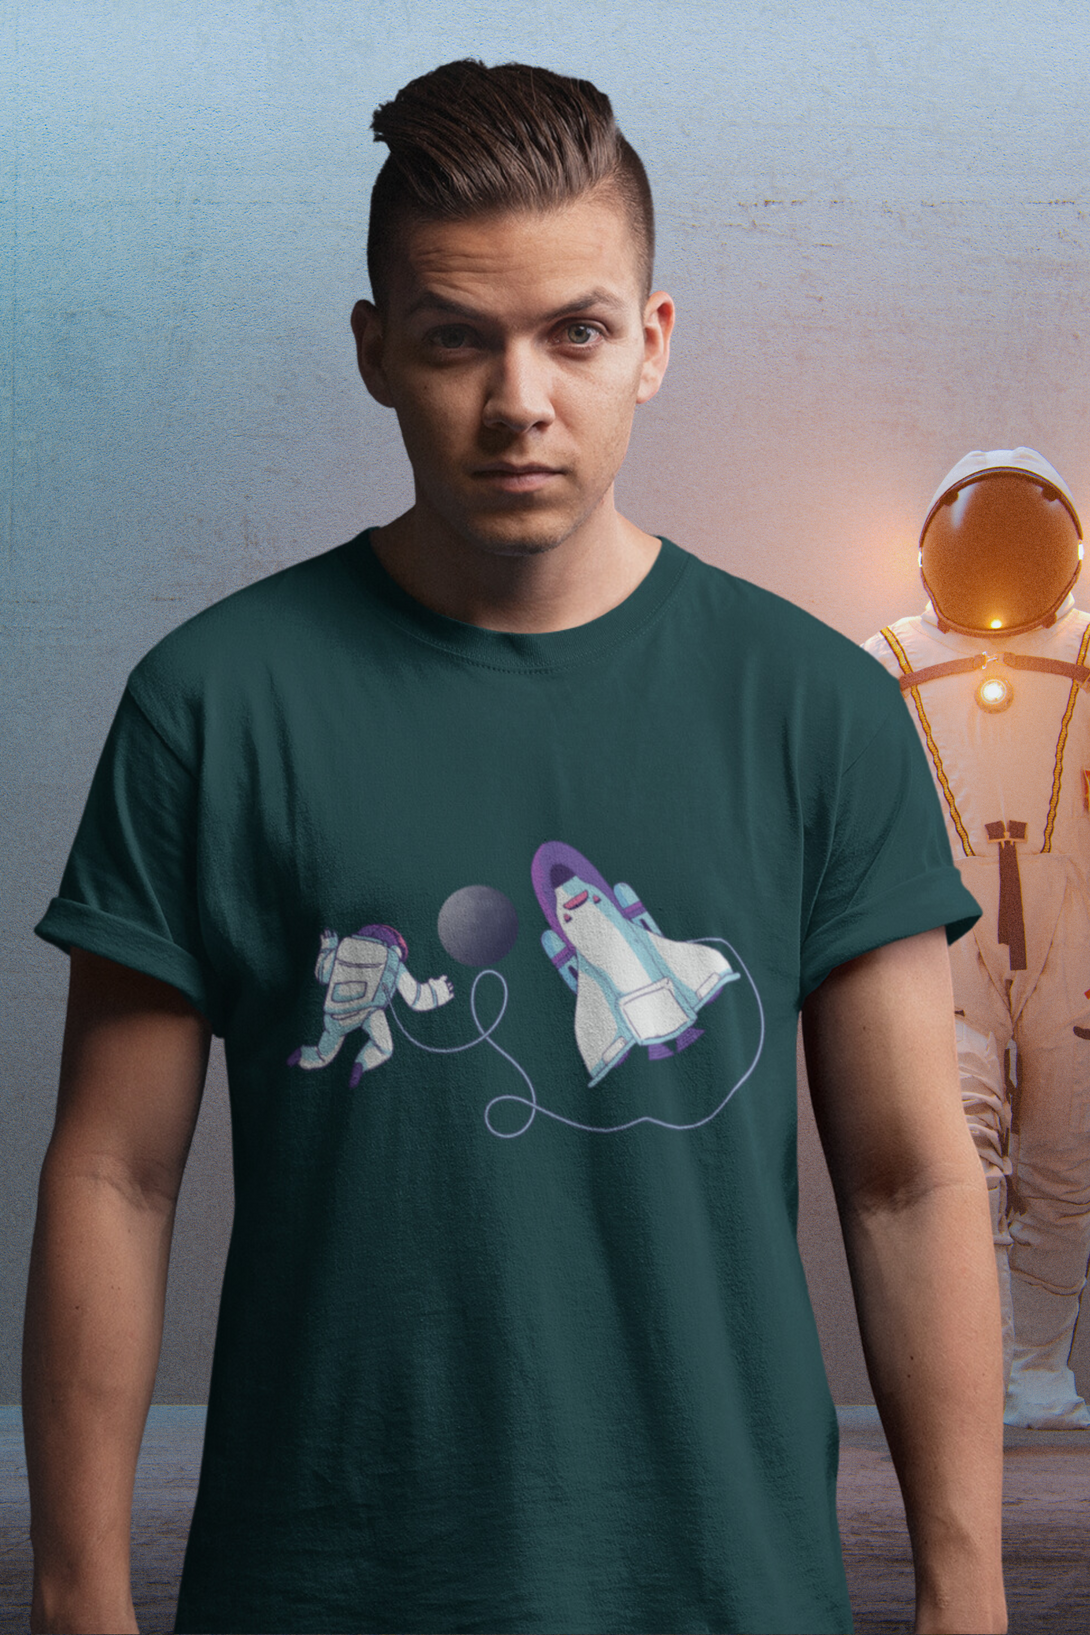 Cosmic Spacewalk Printed T-Shirt For Men - WowWaves - 2